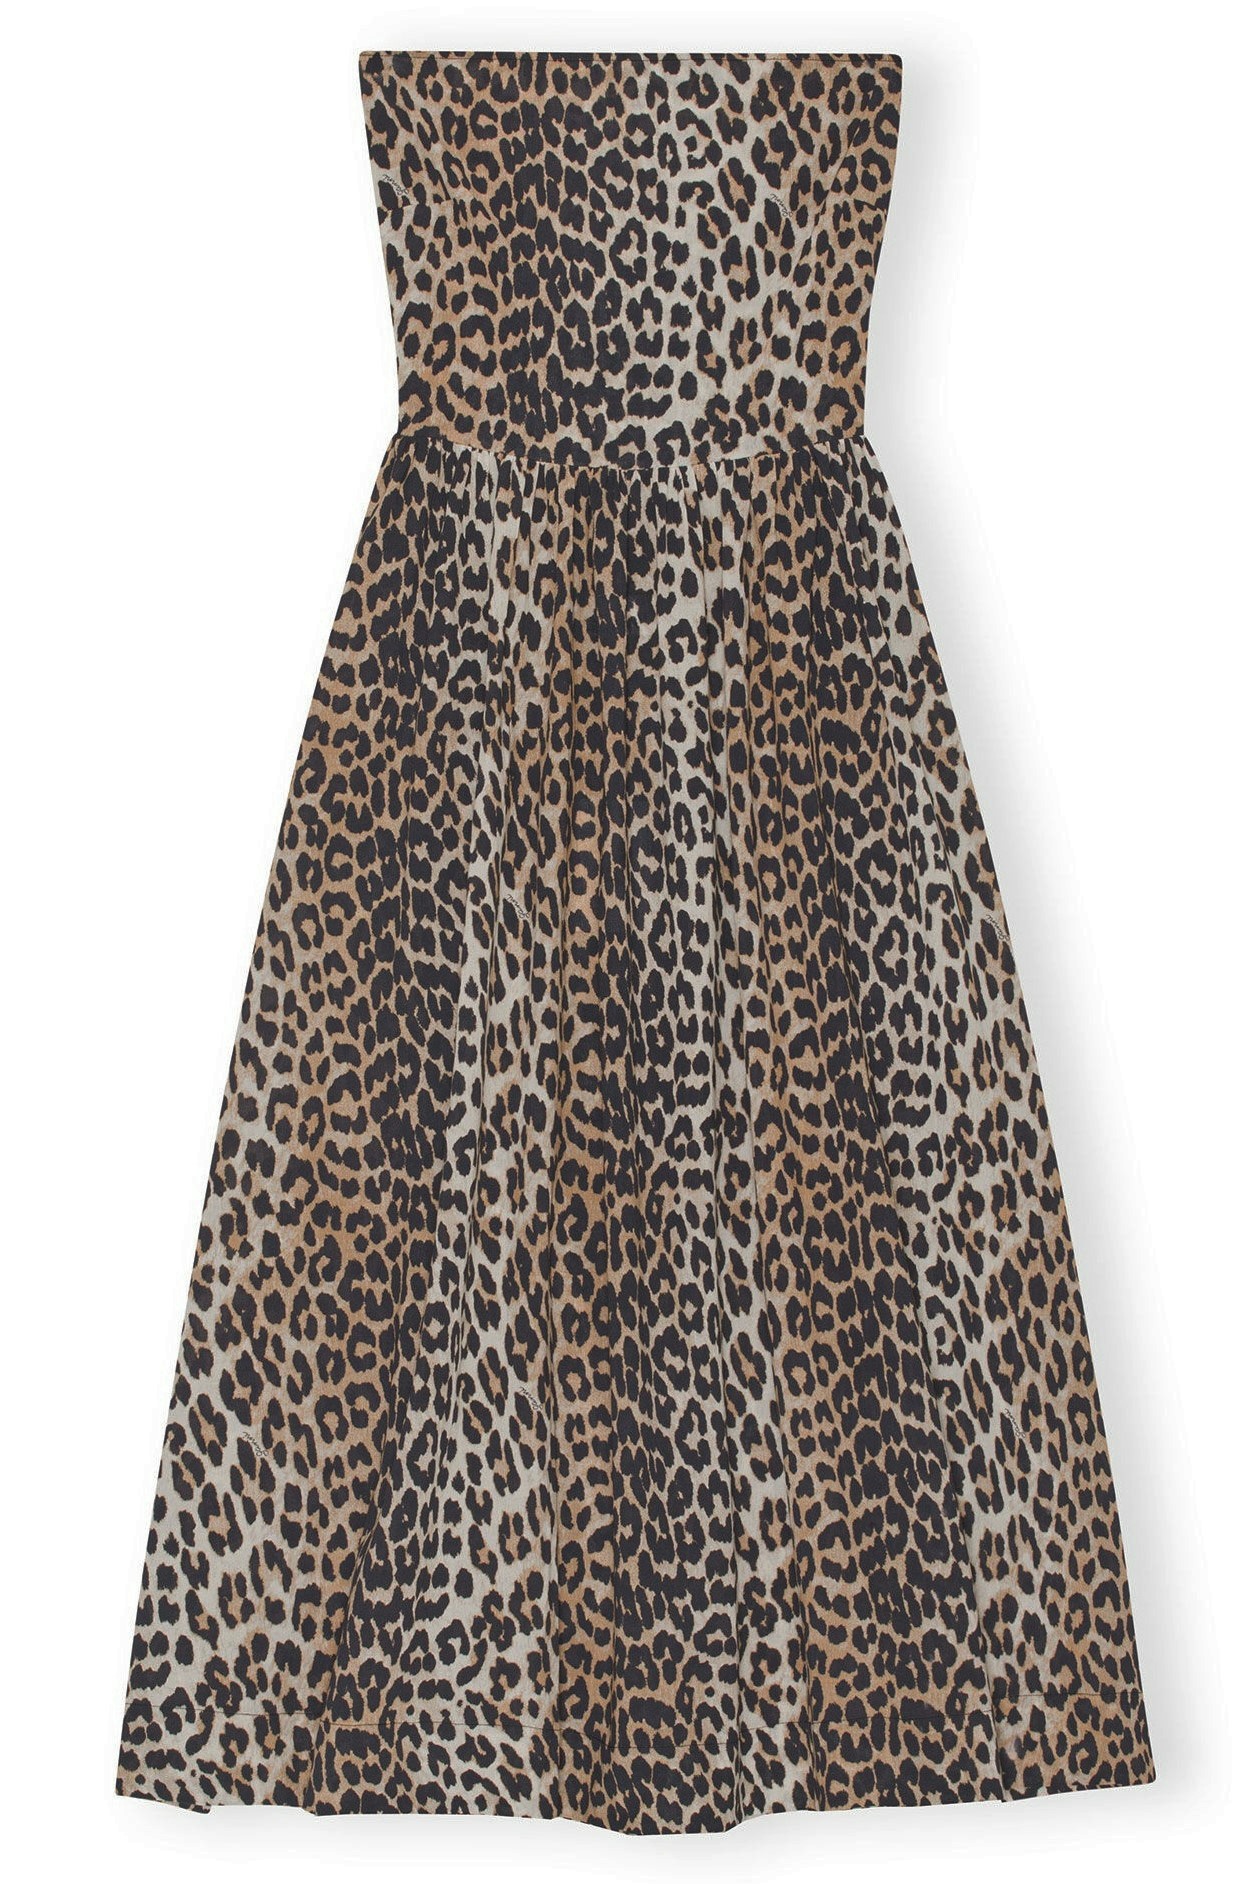 GANNI Light Cotton Tieband Multifunctional Dress in Leopard L / XL